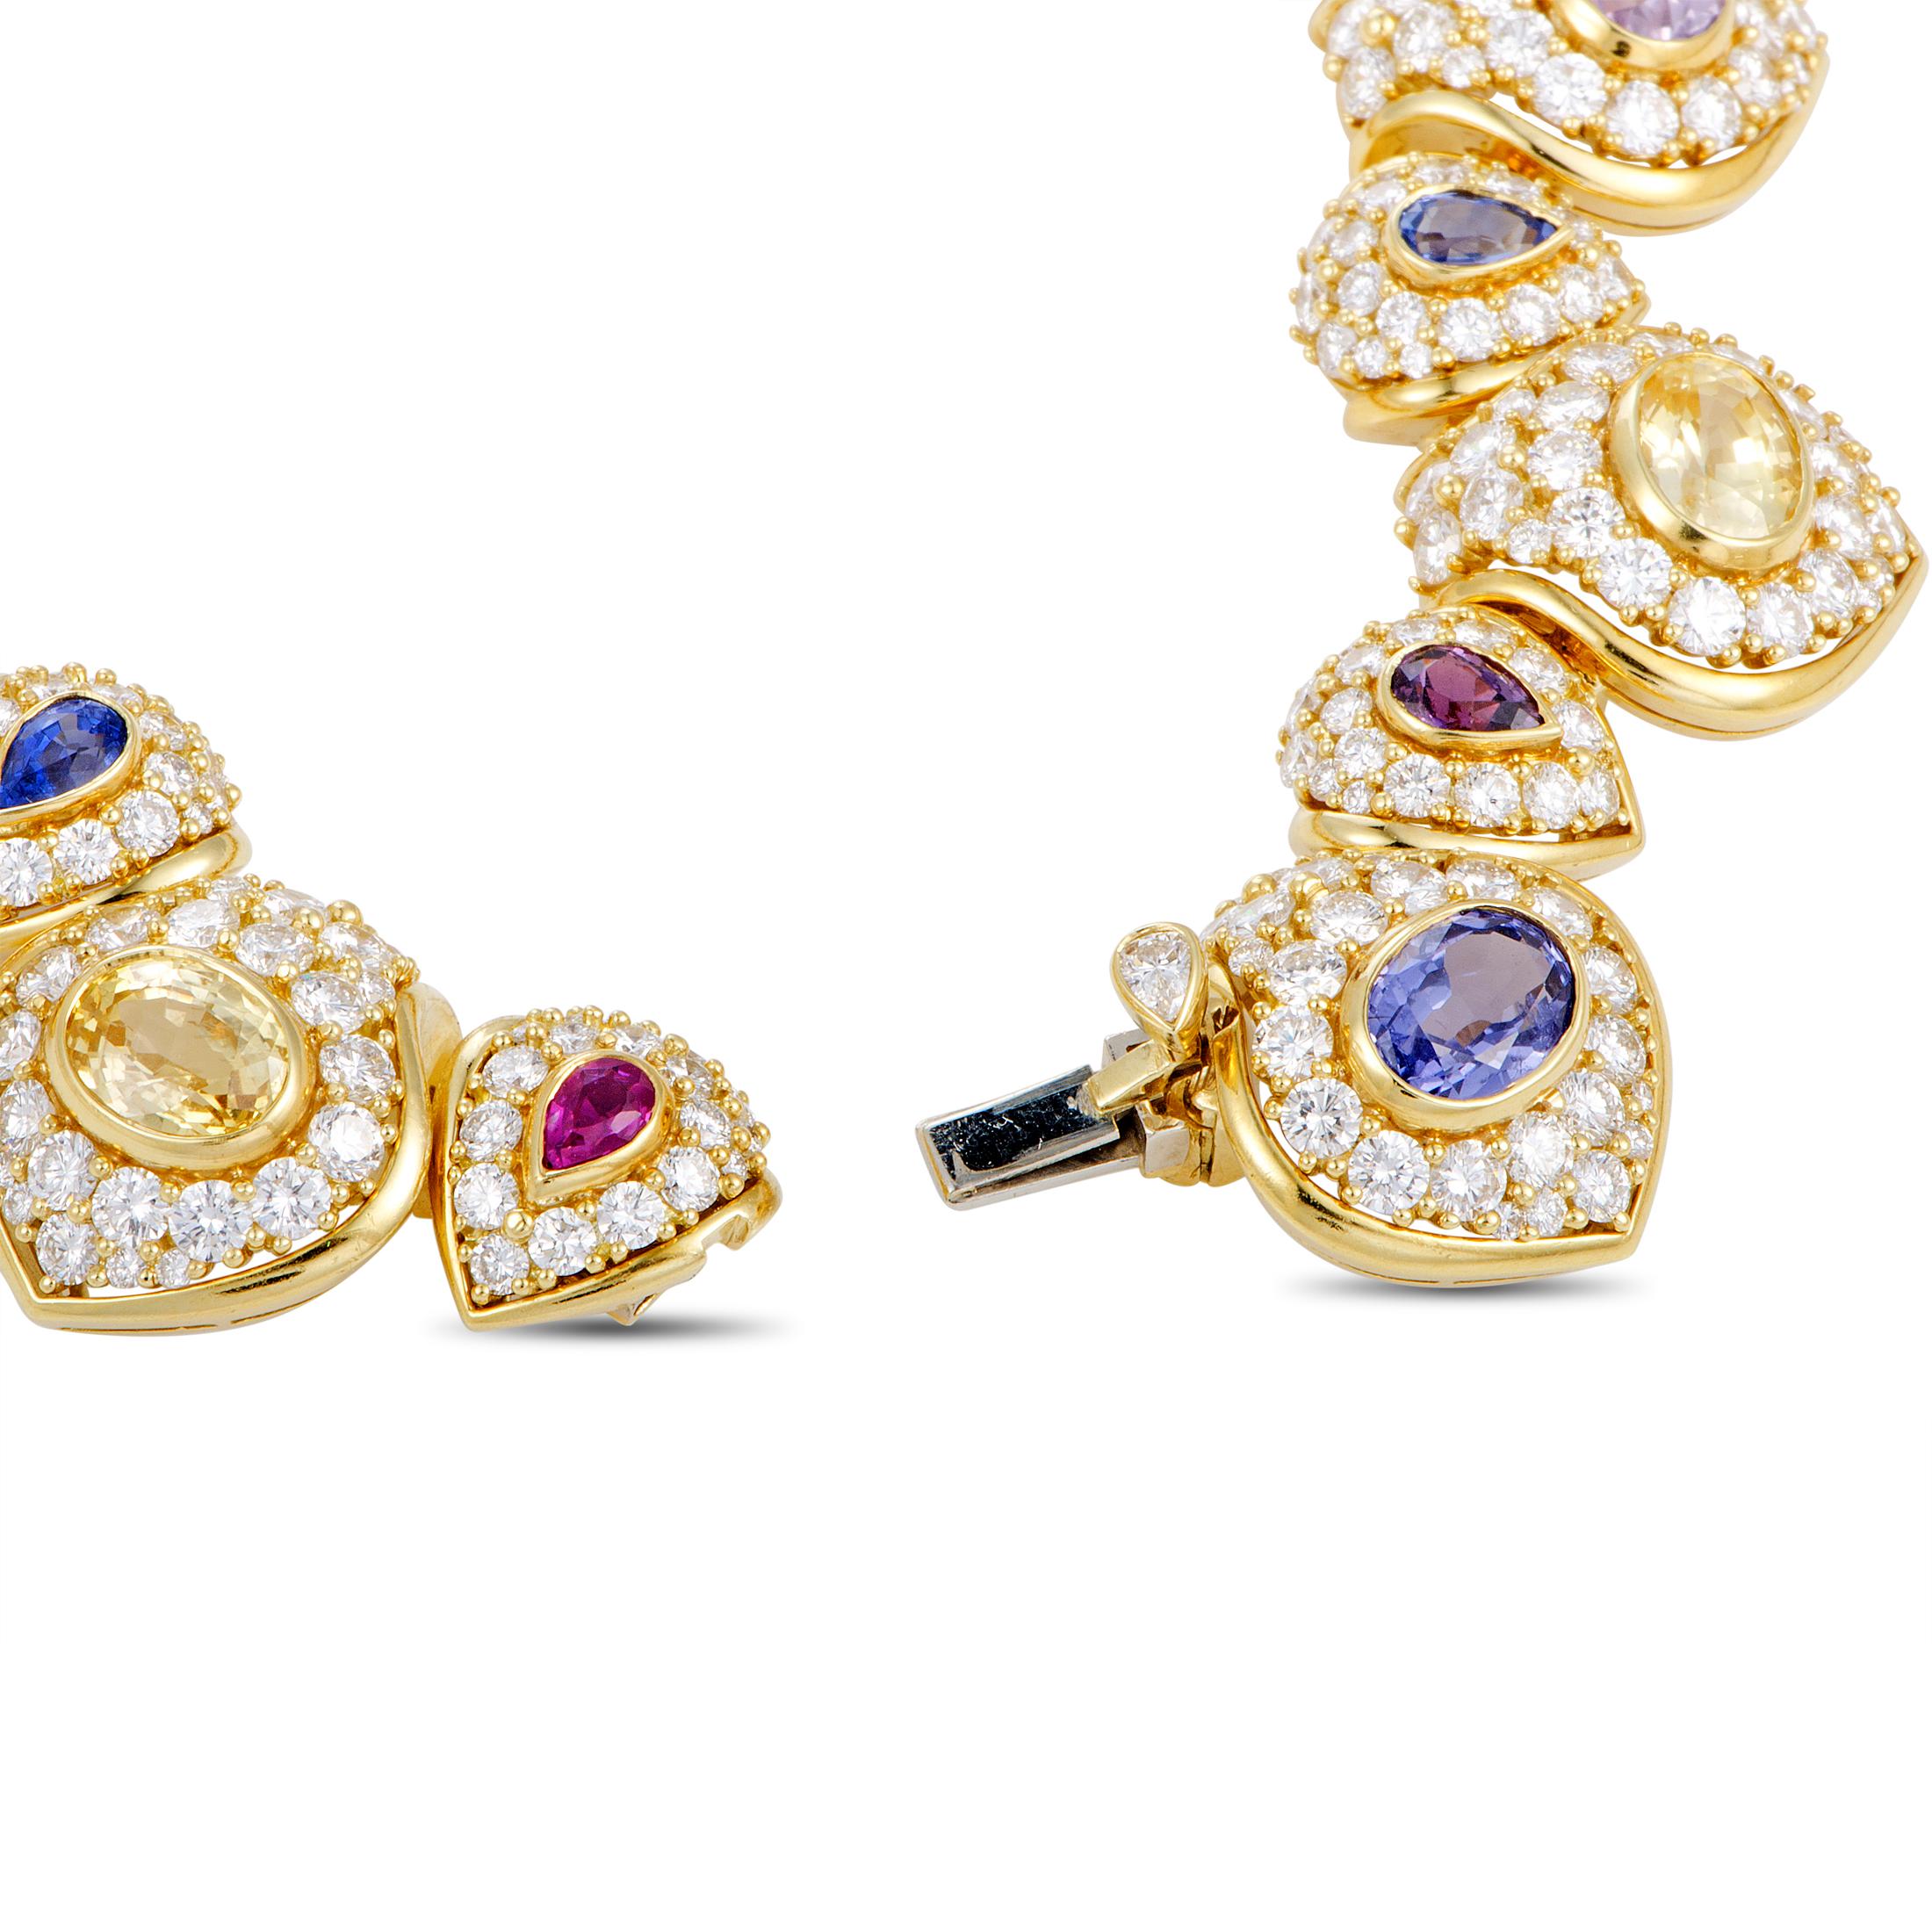 Women's Kurt Wayne Diamond and Multicolored Sapphire Gold Earrings and Necklace Set